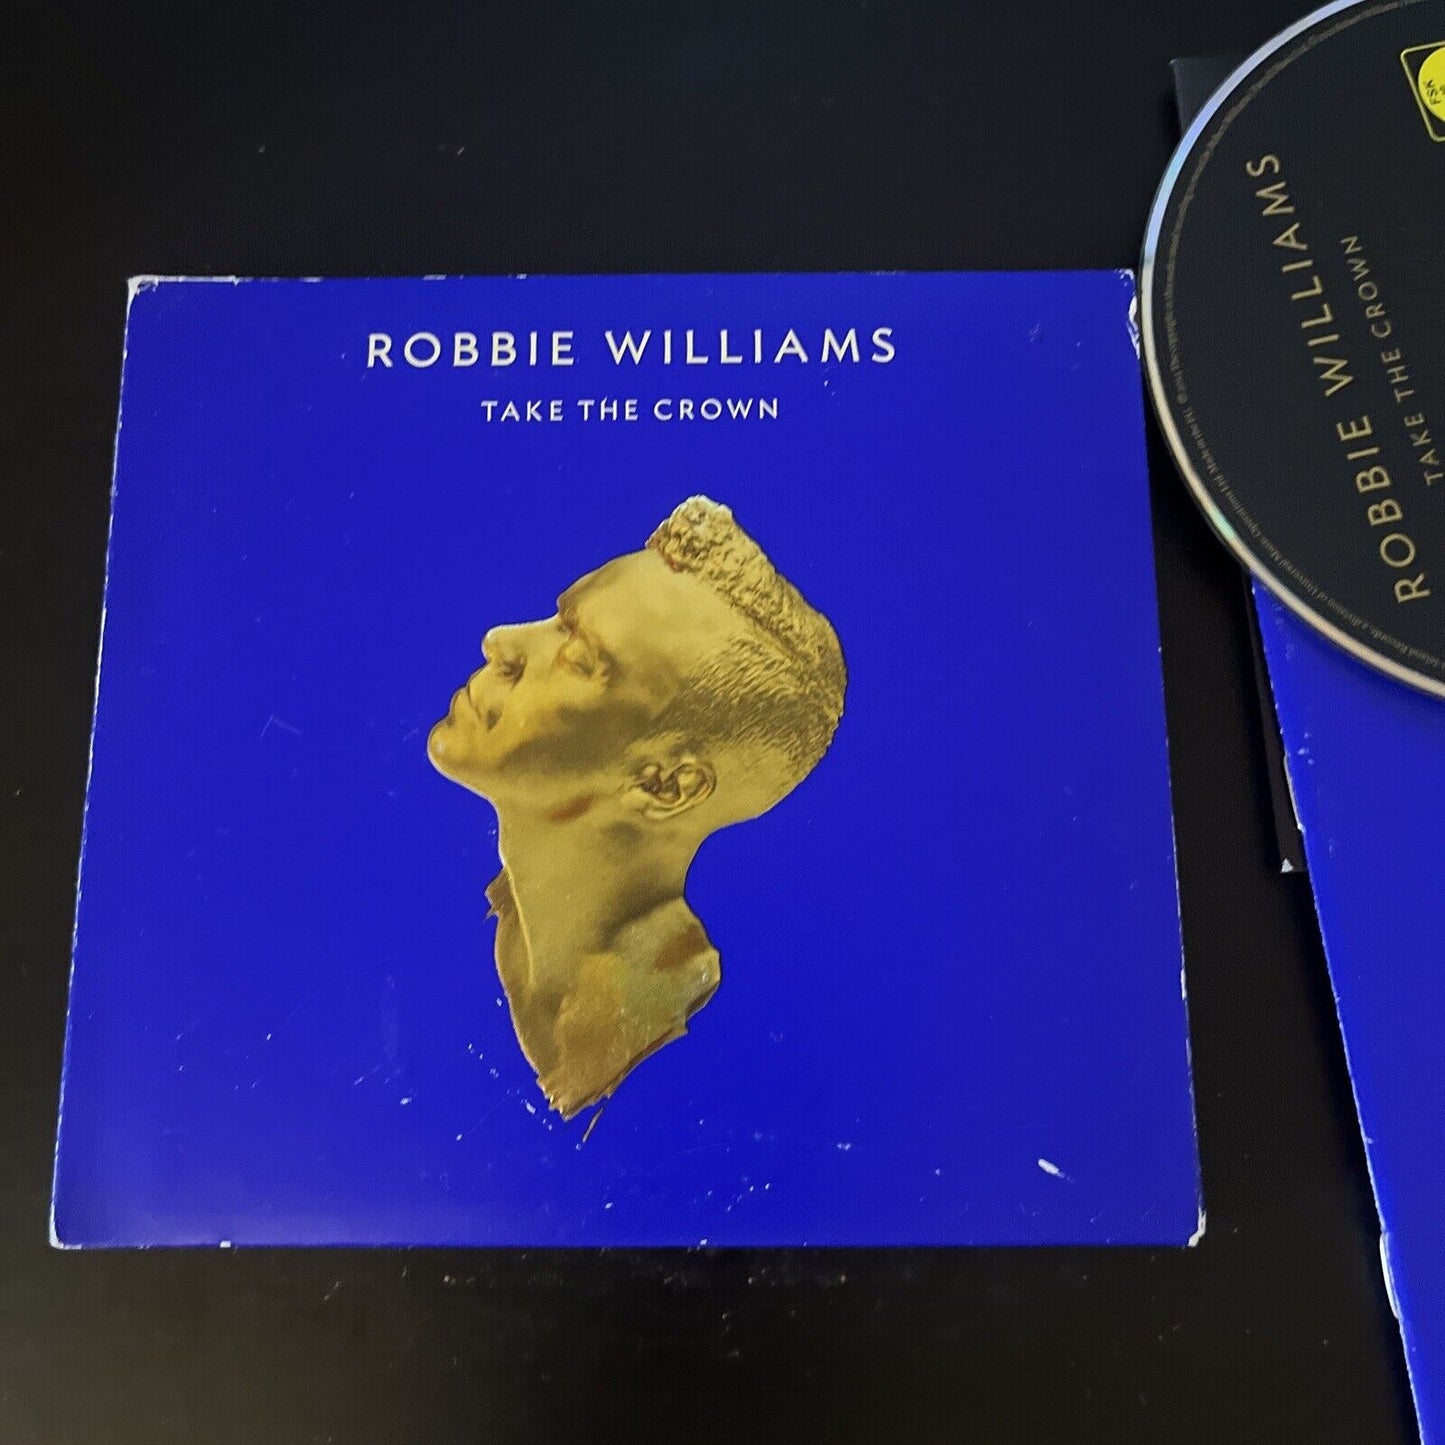 Robbie Williams - Take the Crown (DVD + CD, 2012) All Regions